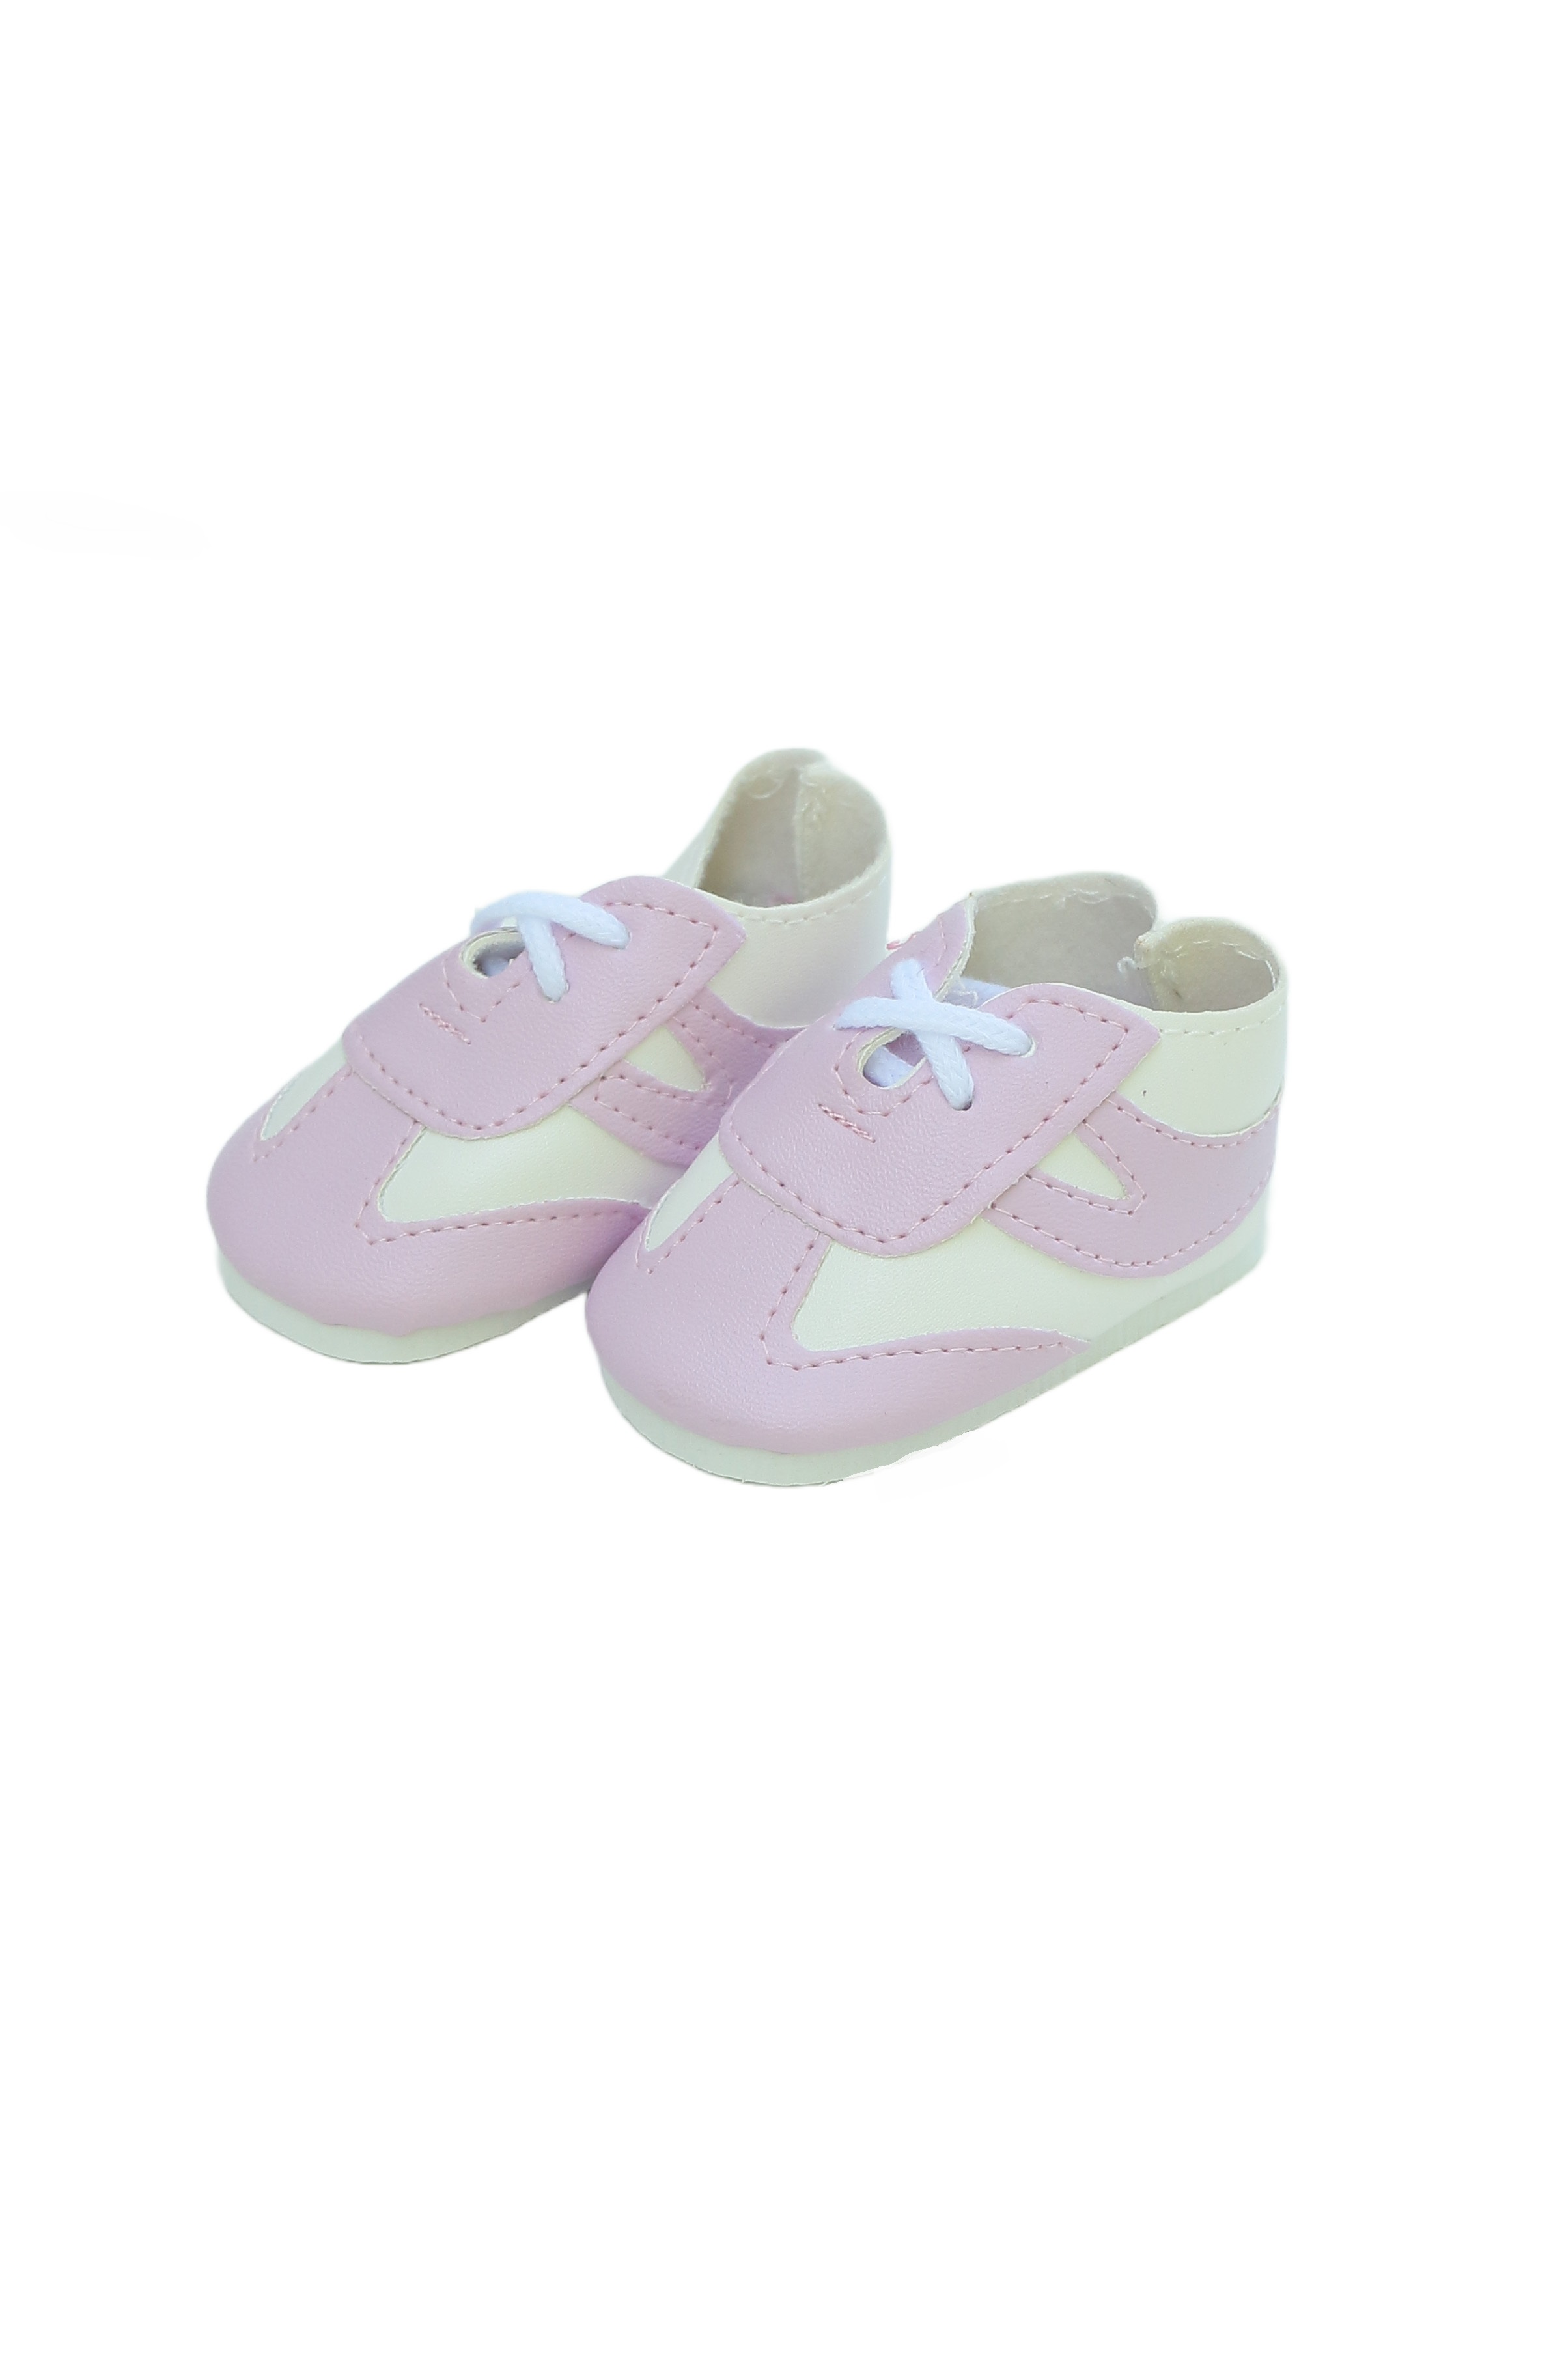 18 inch doll pink sport shoe sneakers